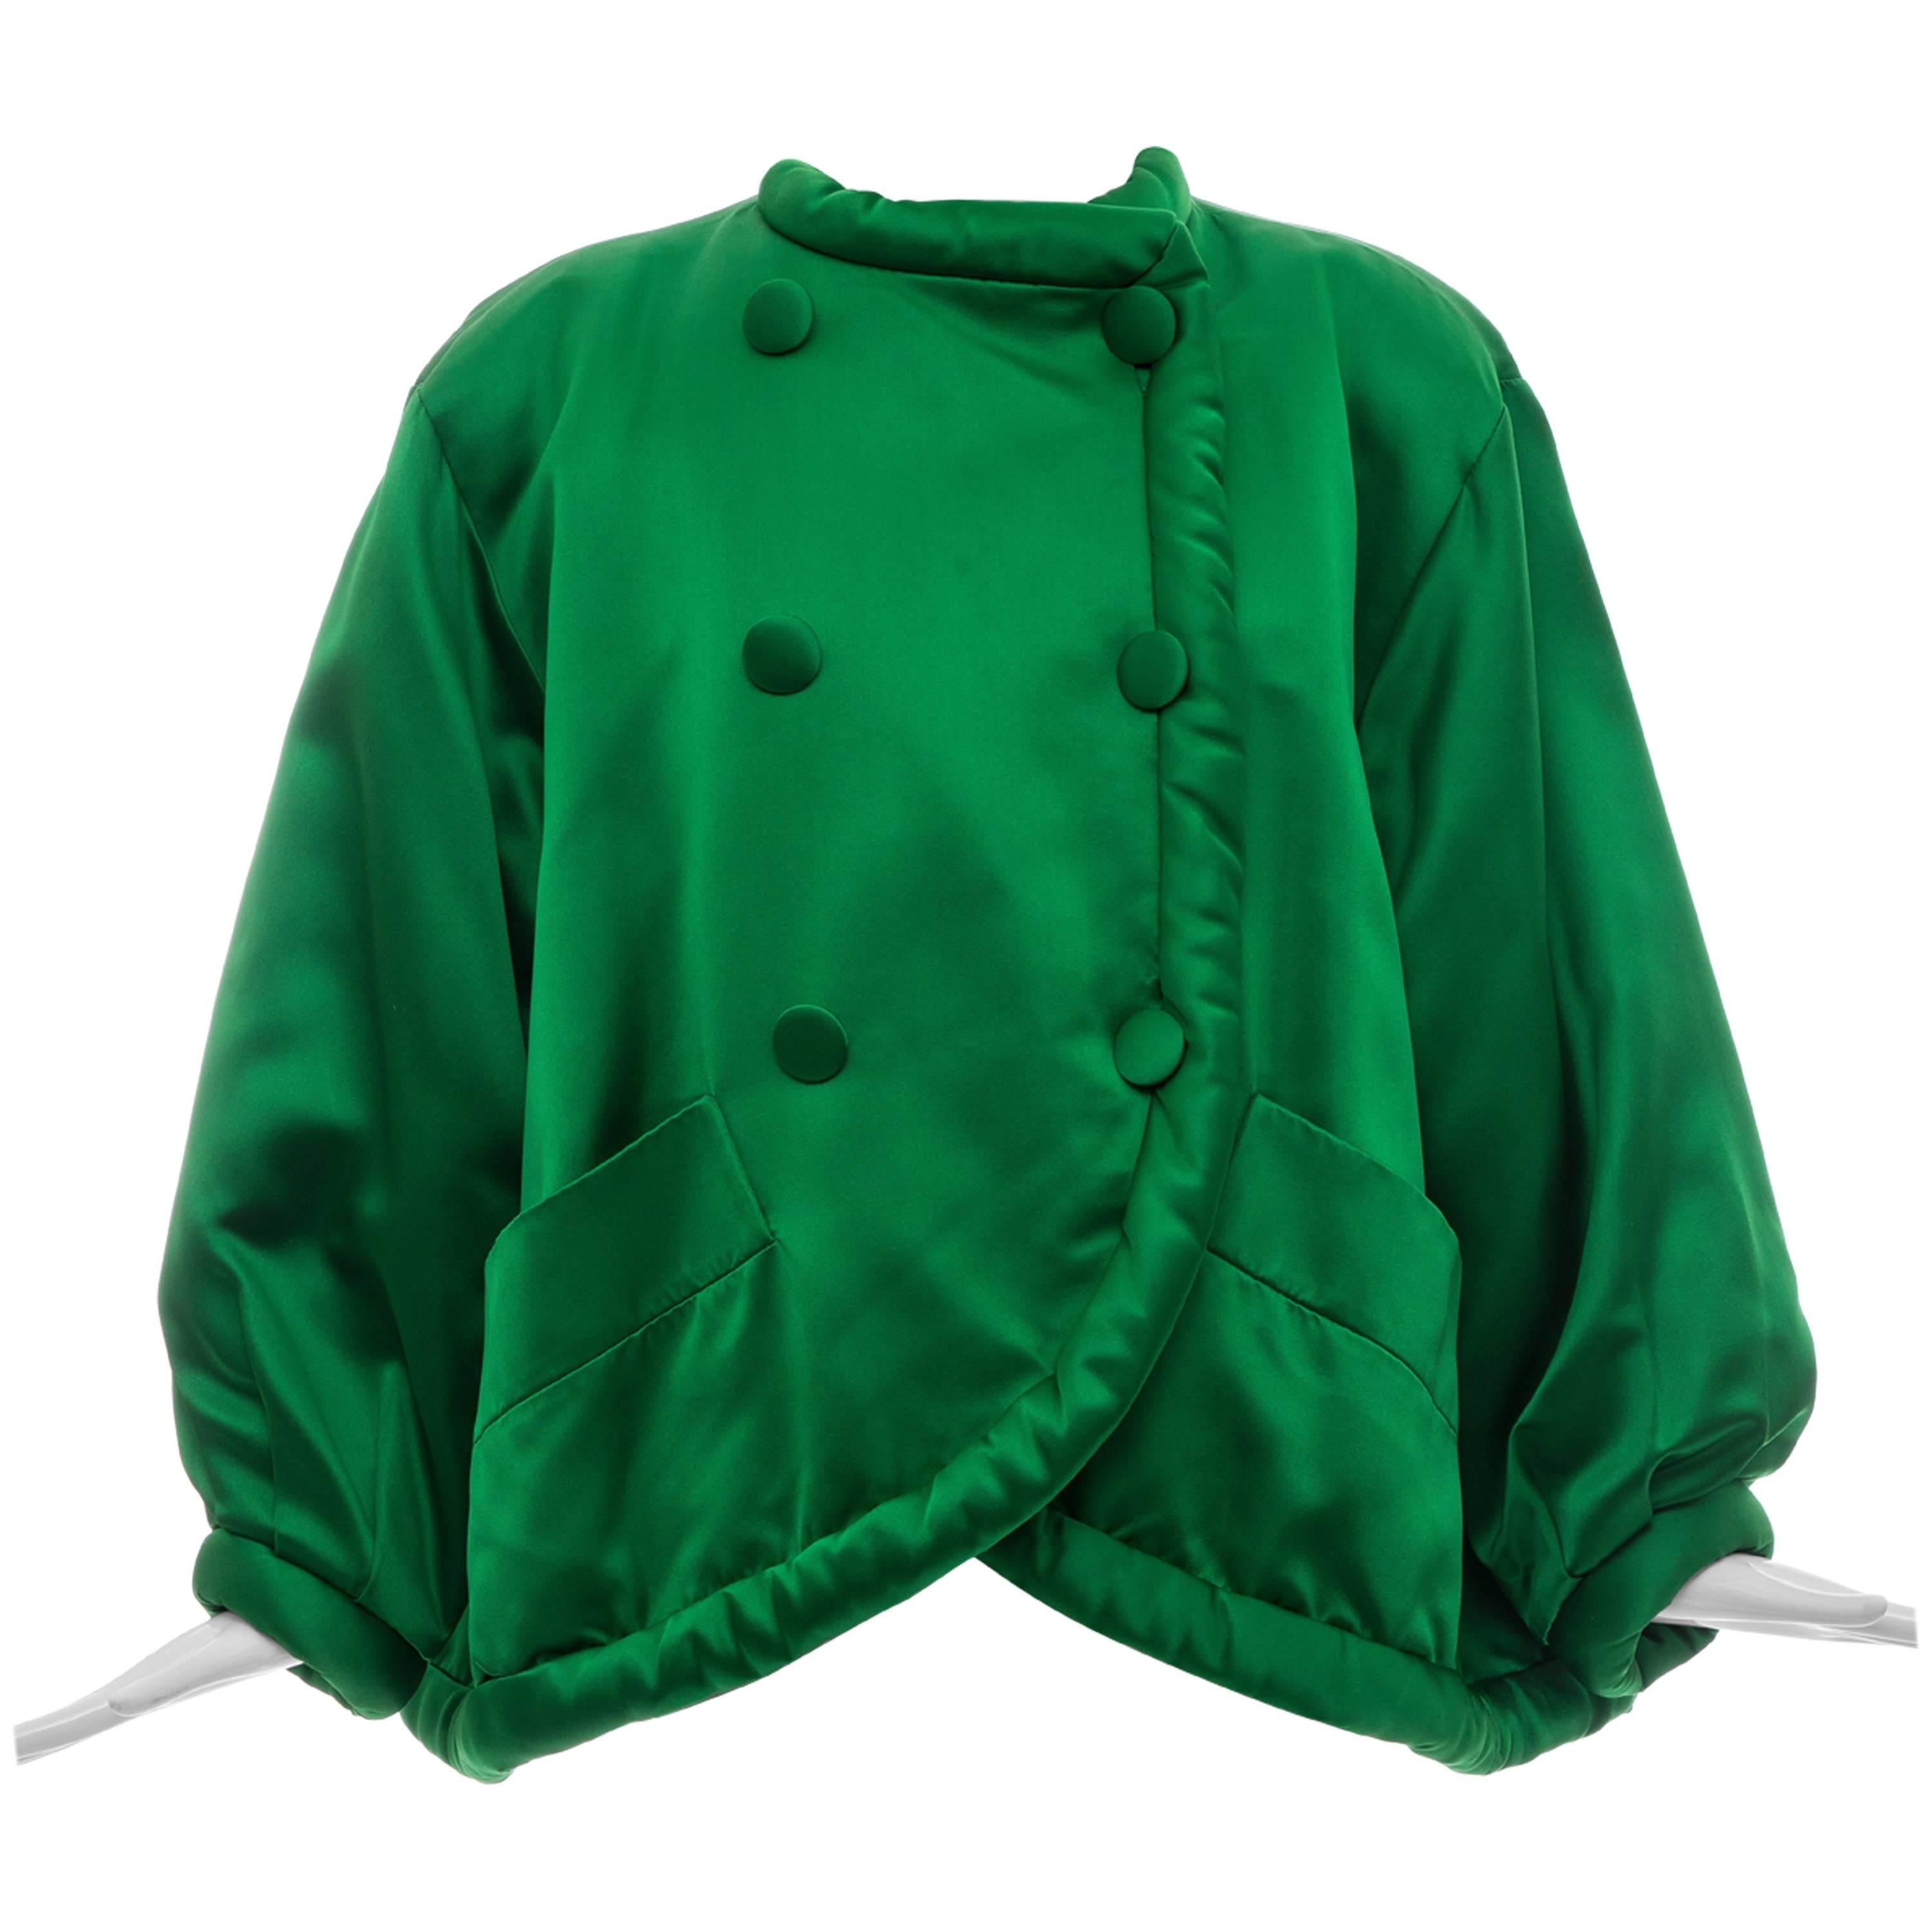 Yves Saint Laurent Rive Gauche Emerald Silk Satin Evening Jacket, Circa 1980's